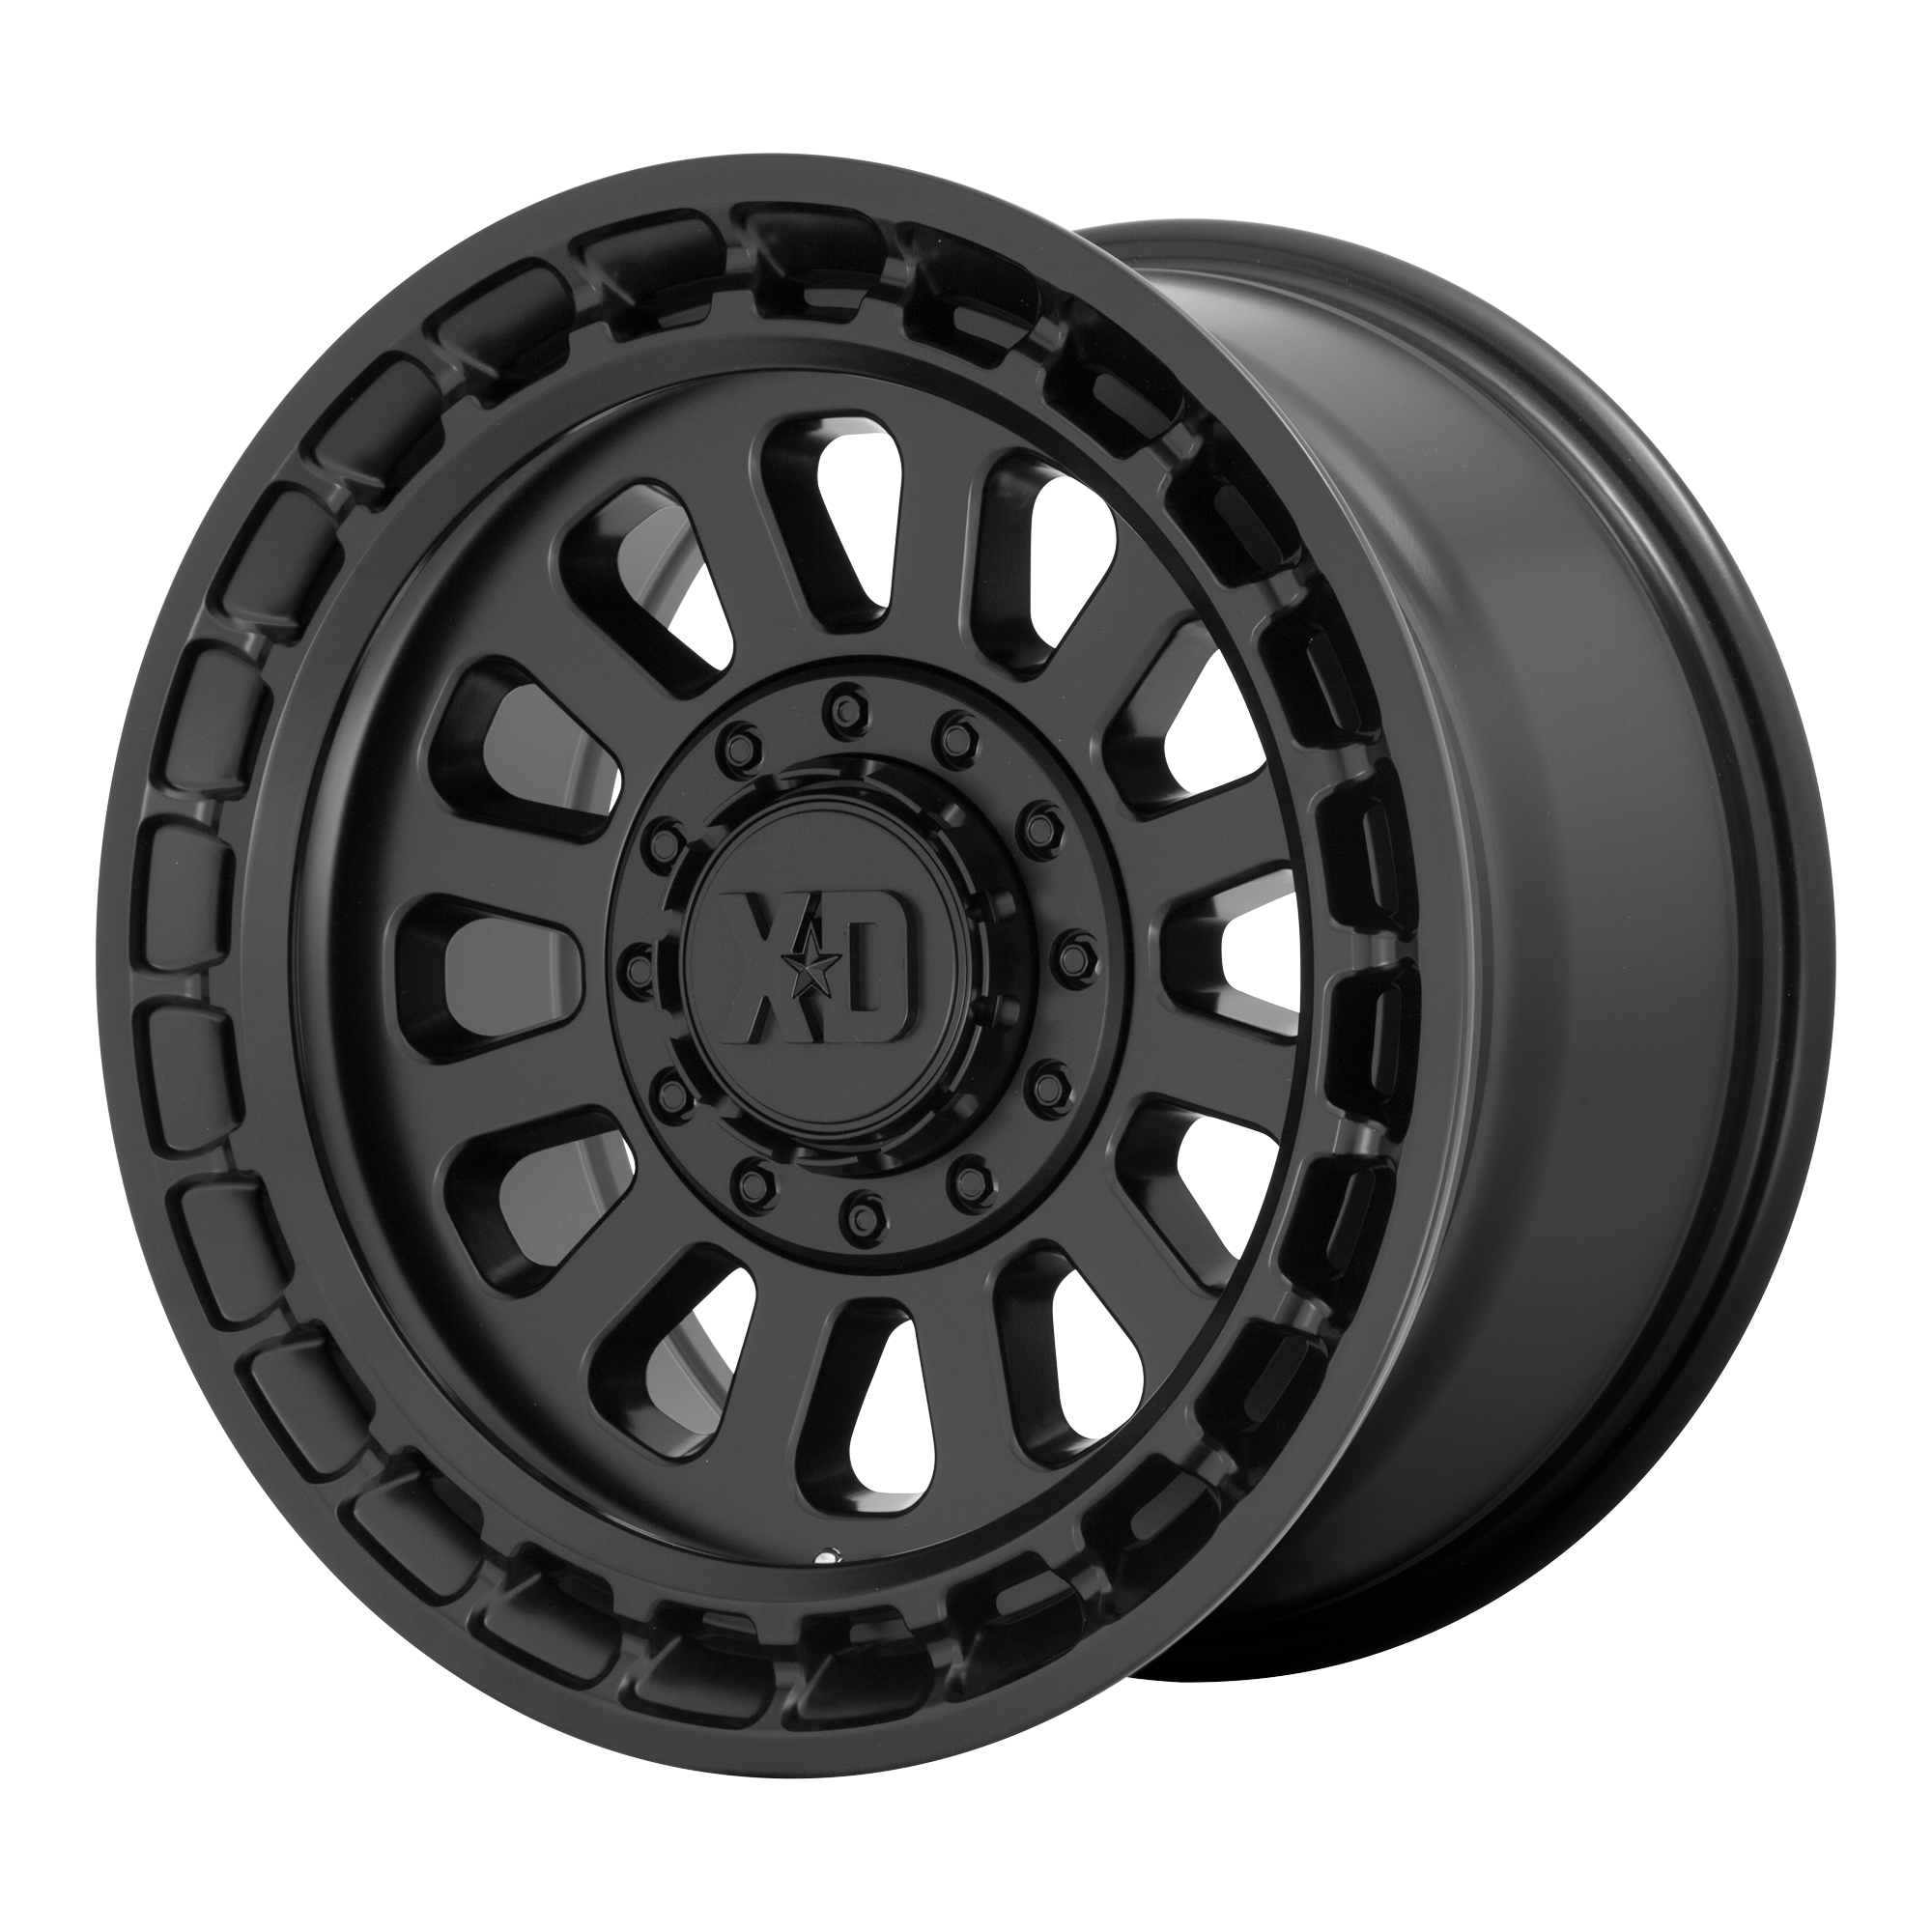 XD 20"x10" Non-Chrome Satin Black Custom Wheel ARSWCWXD85621035718N